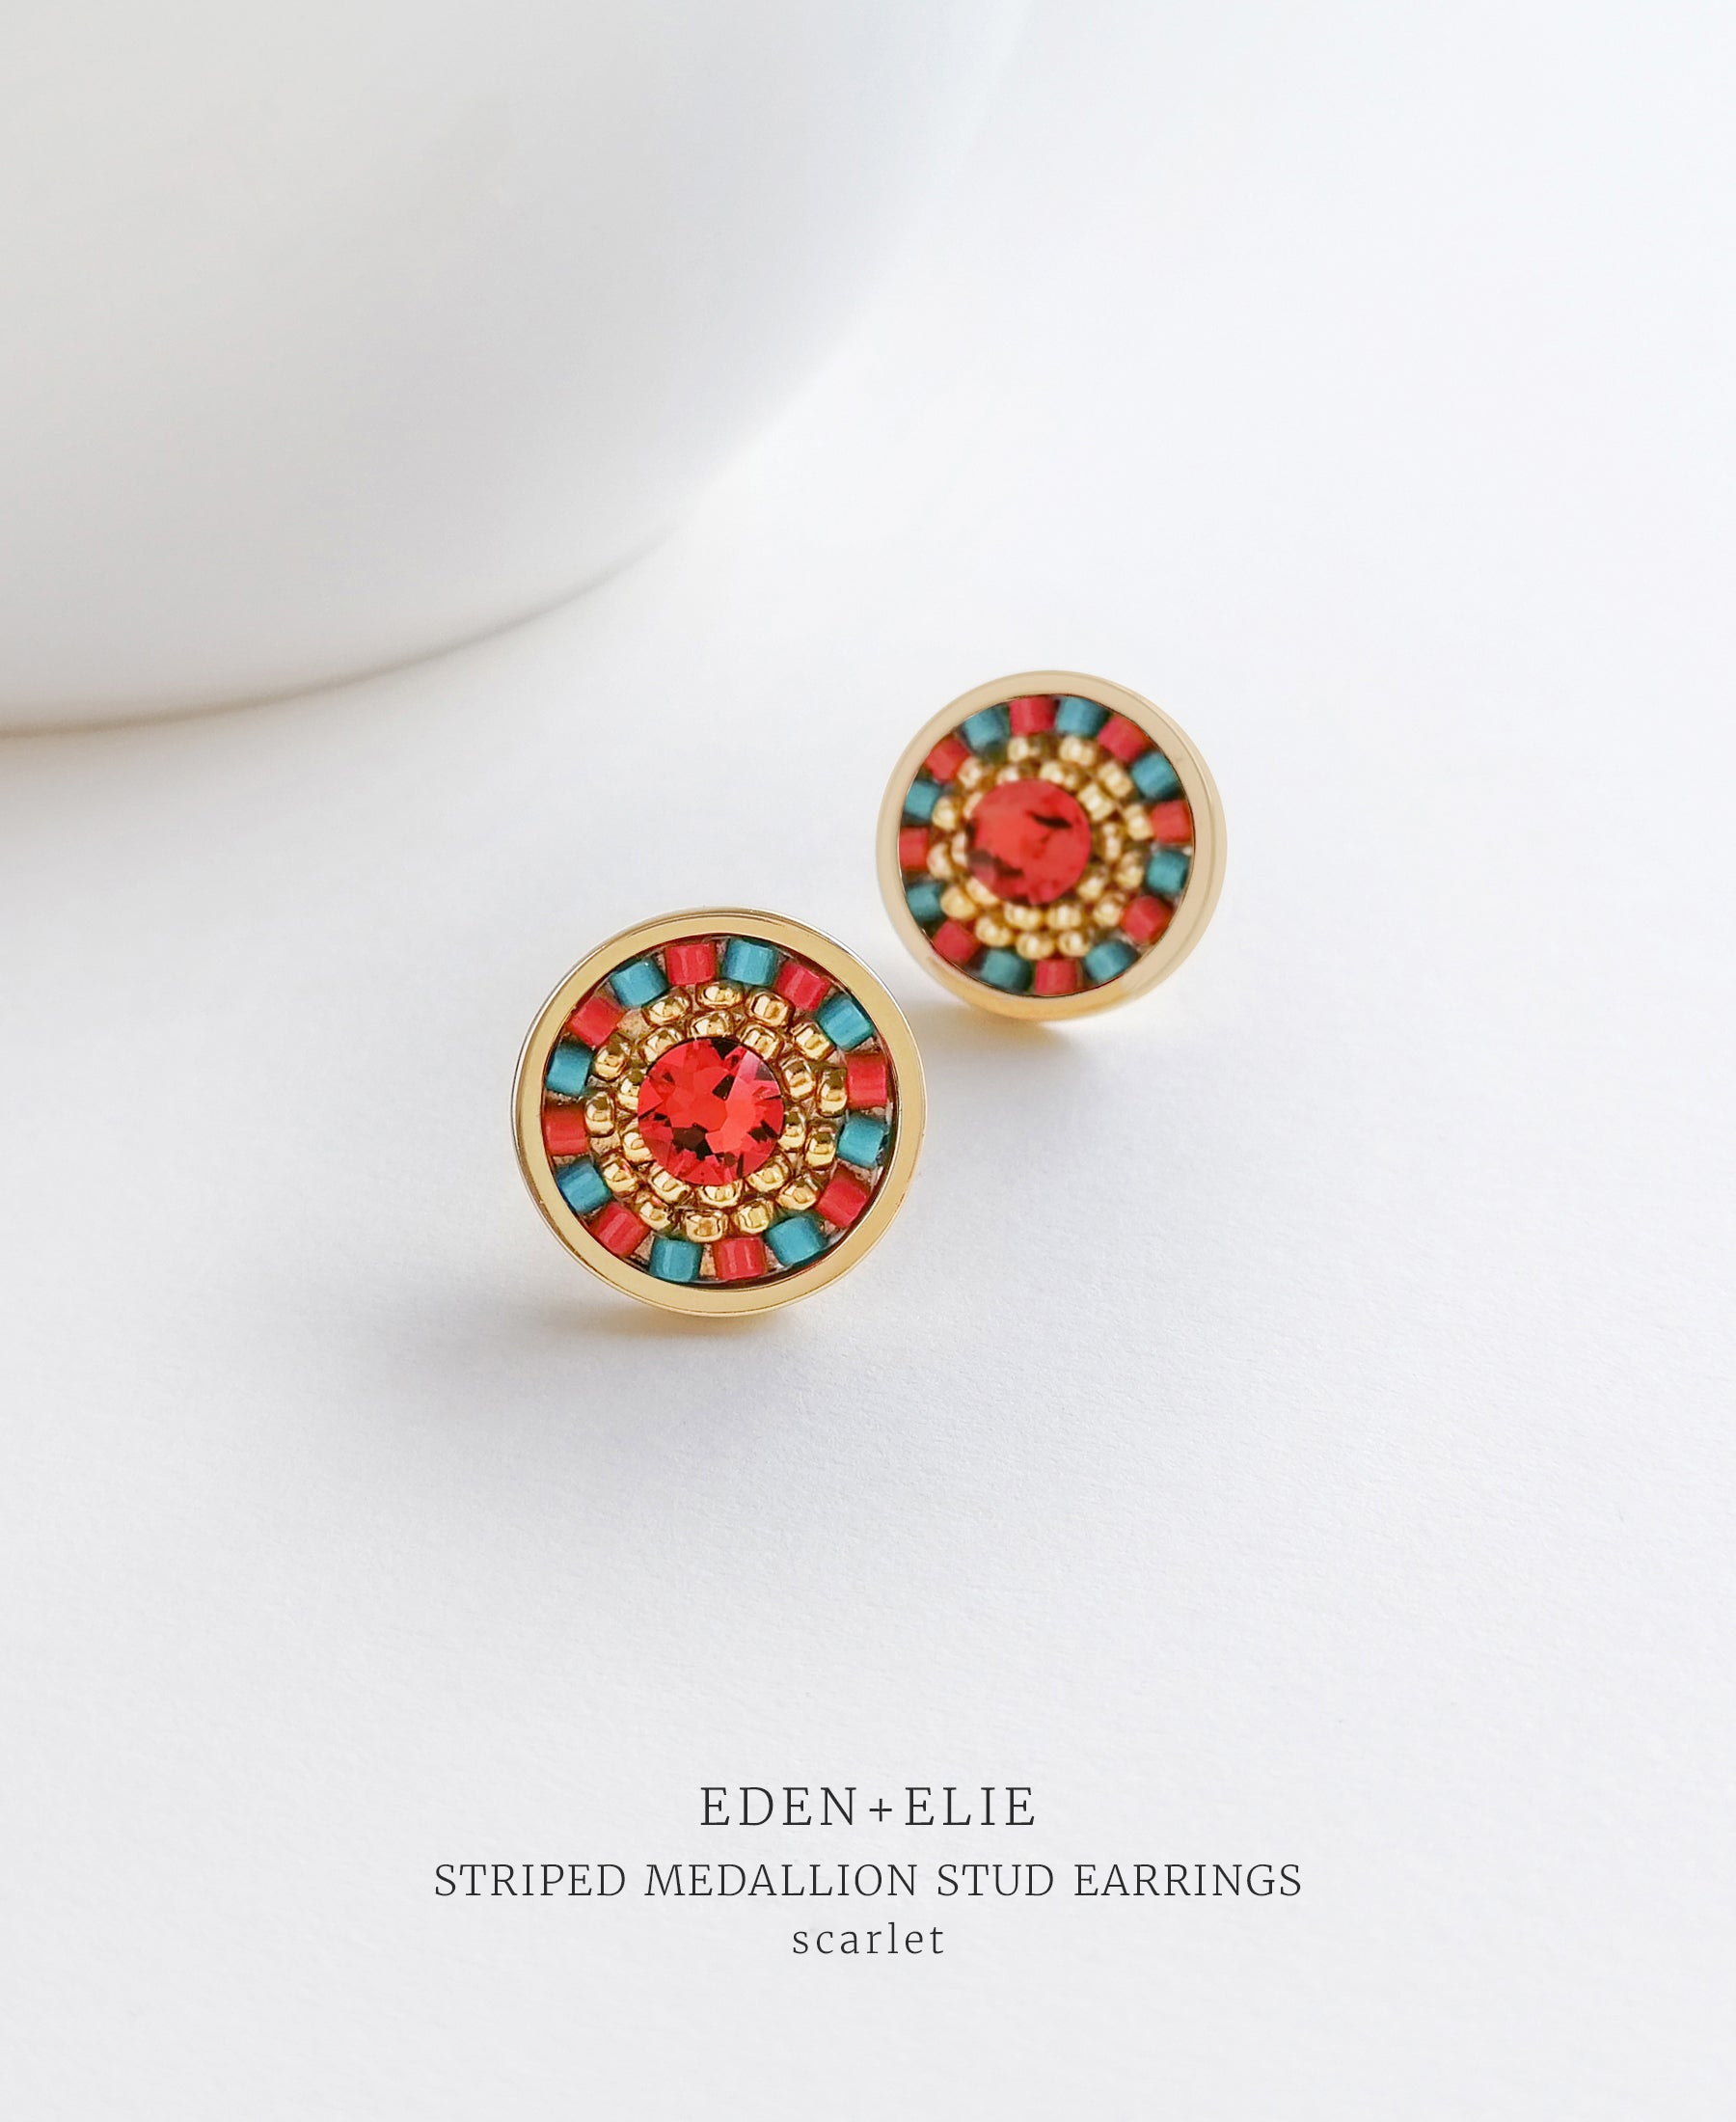 EDEN + ELIE Striped Medallion stud earrings - scarlet